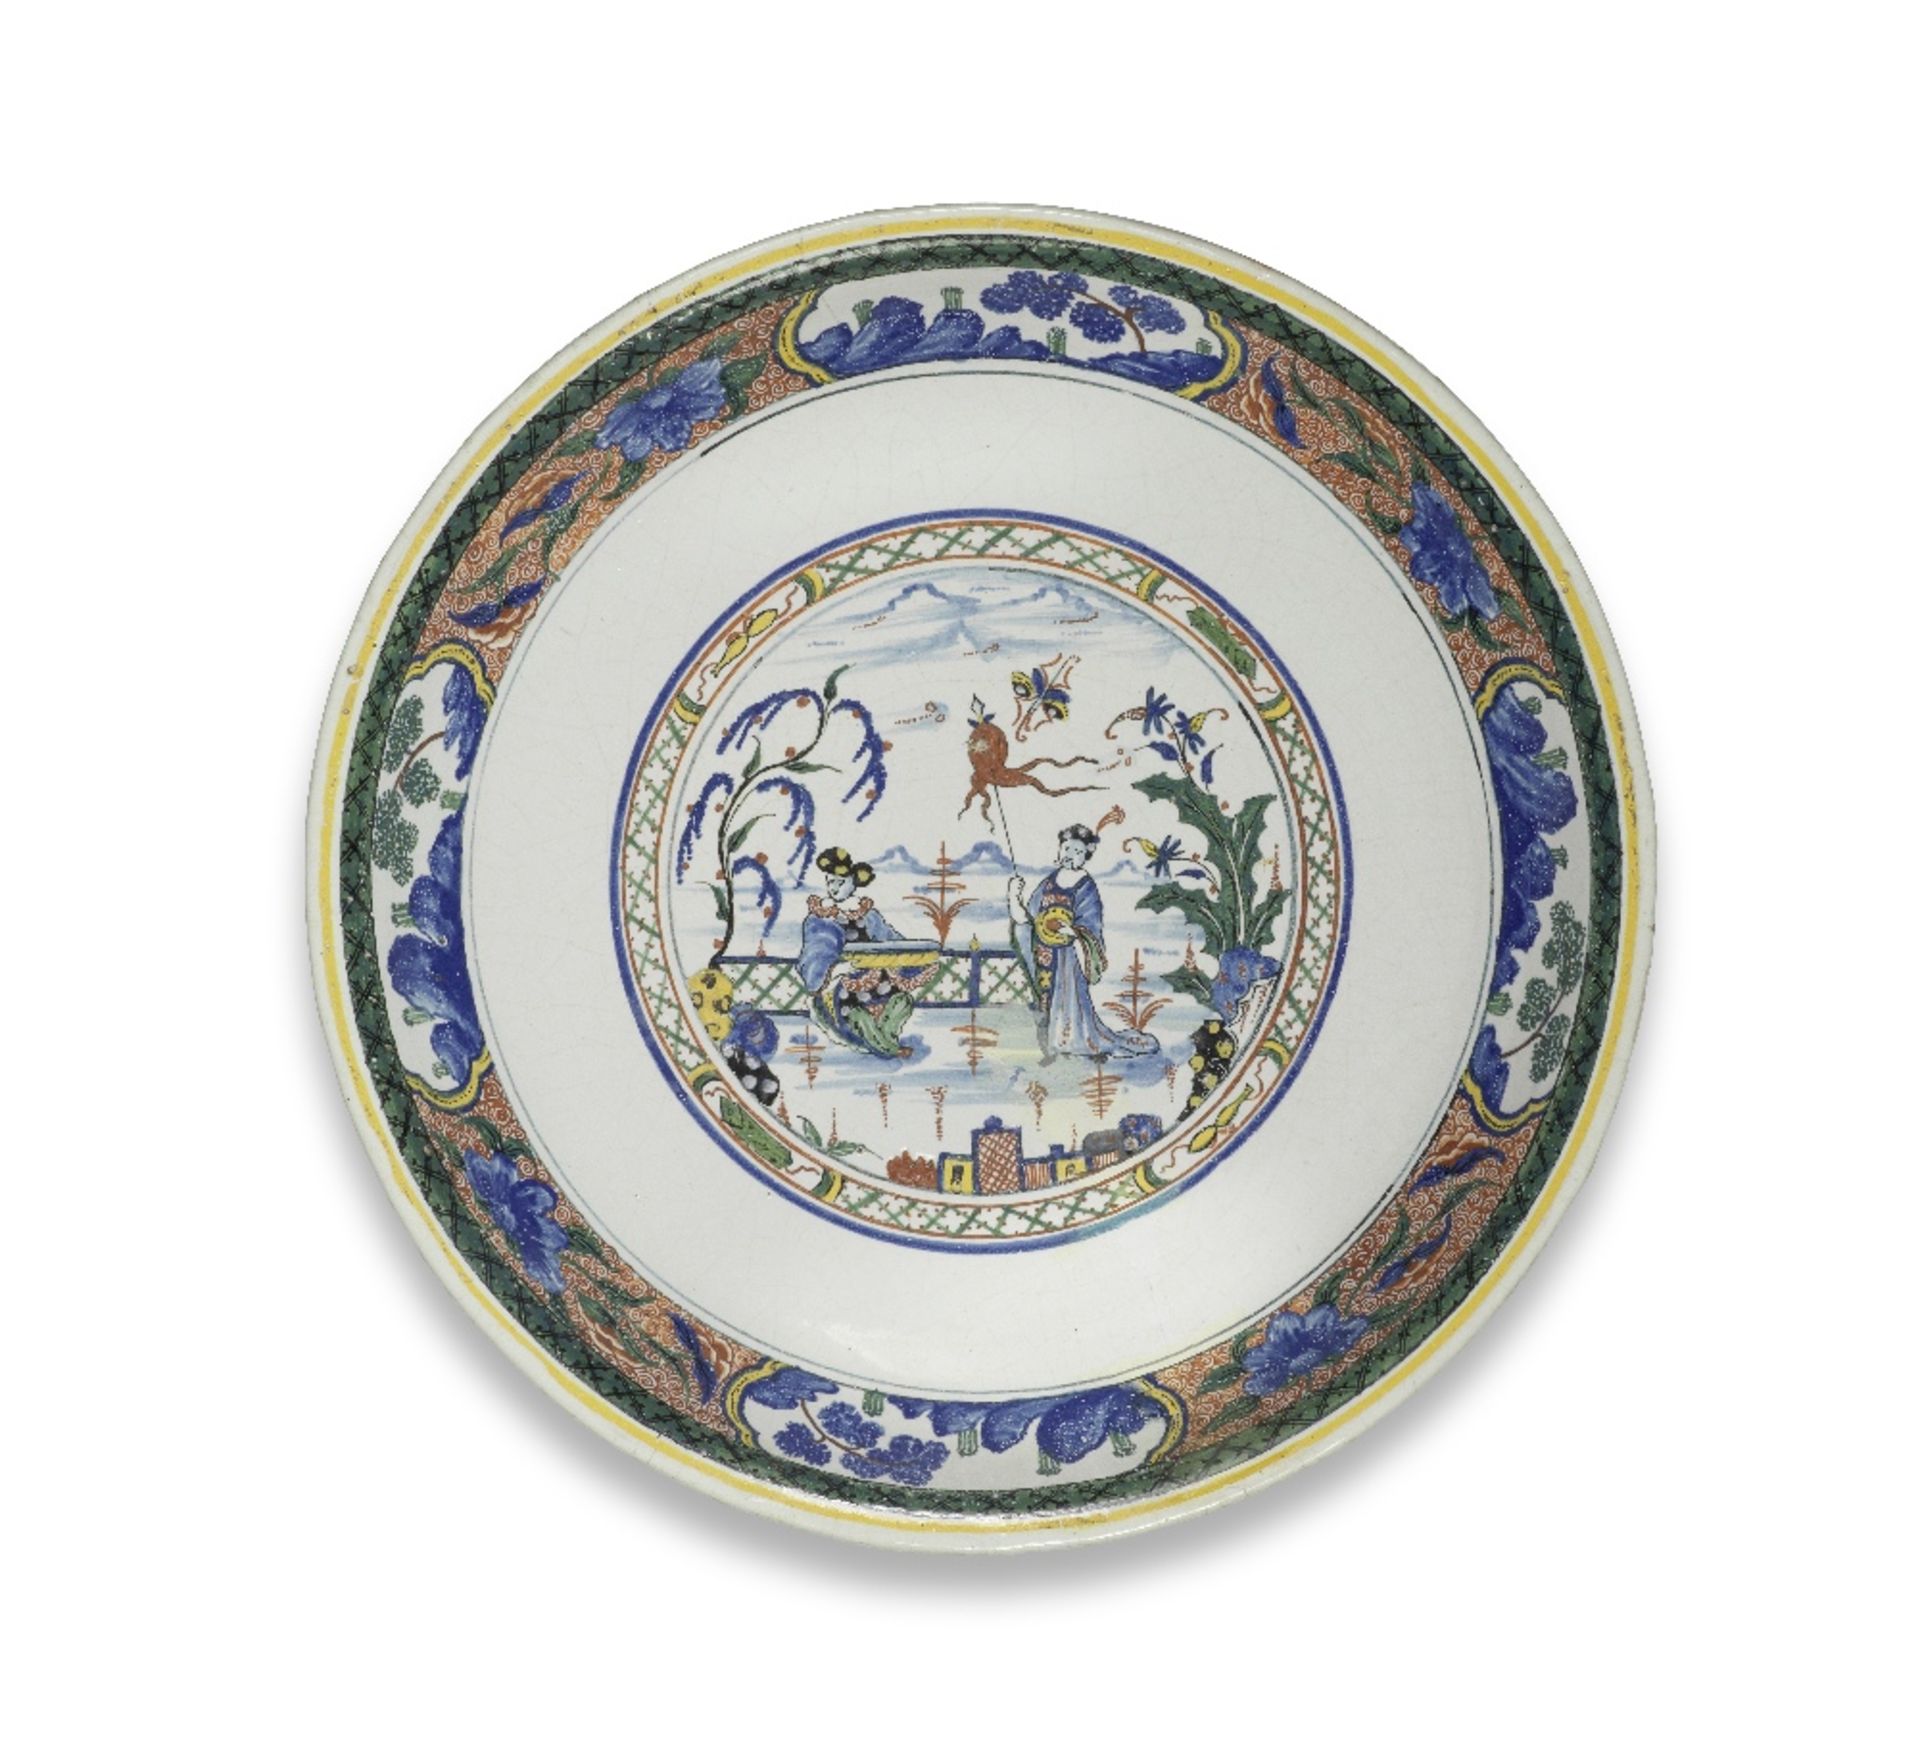 A Rouen faience bowl, first half 18th century